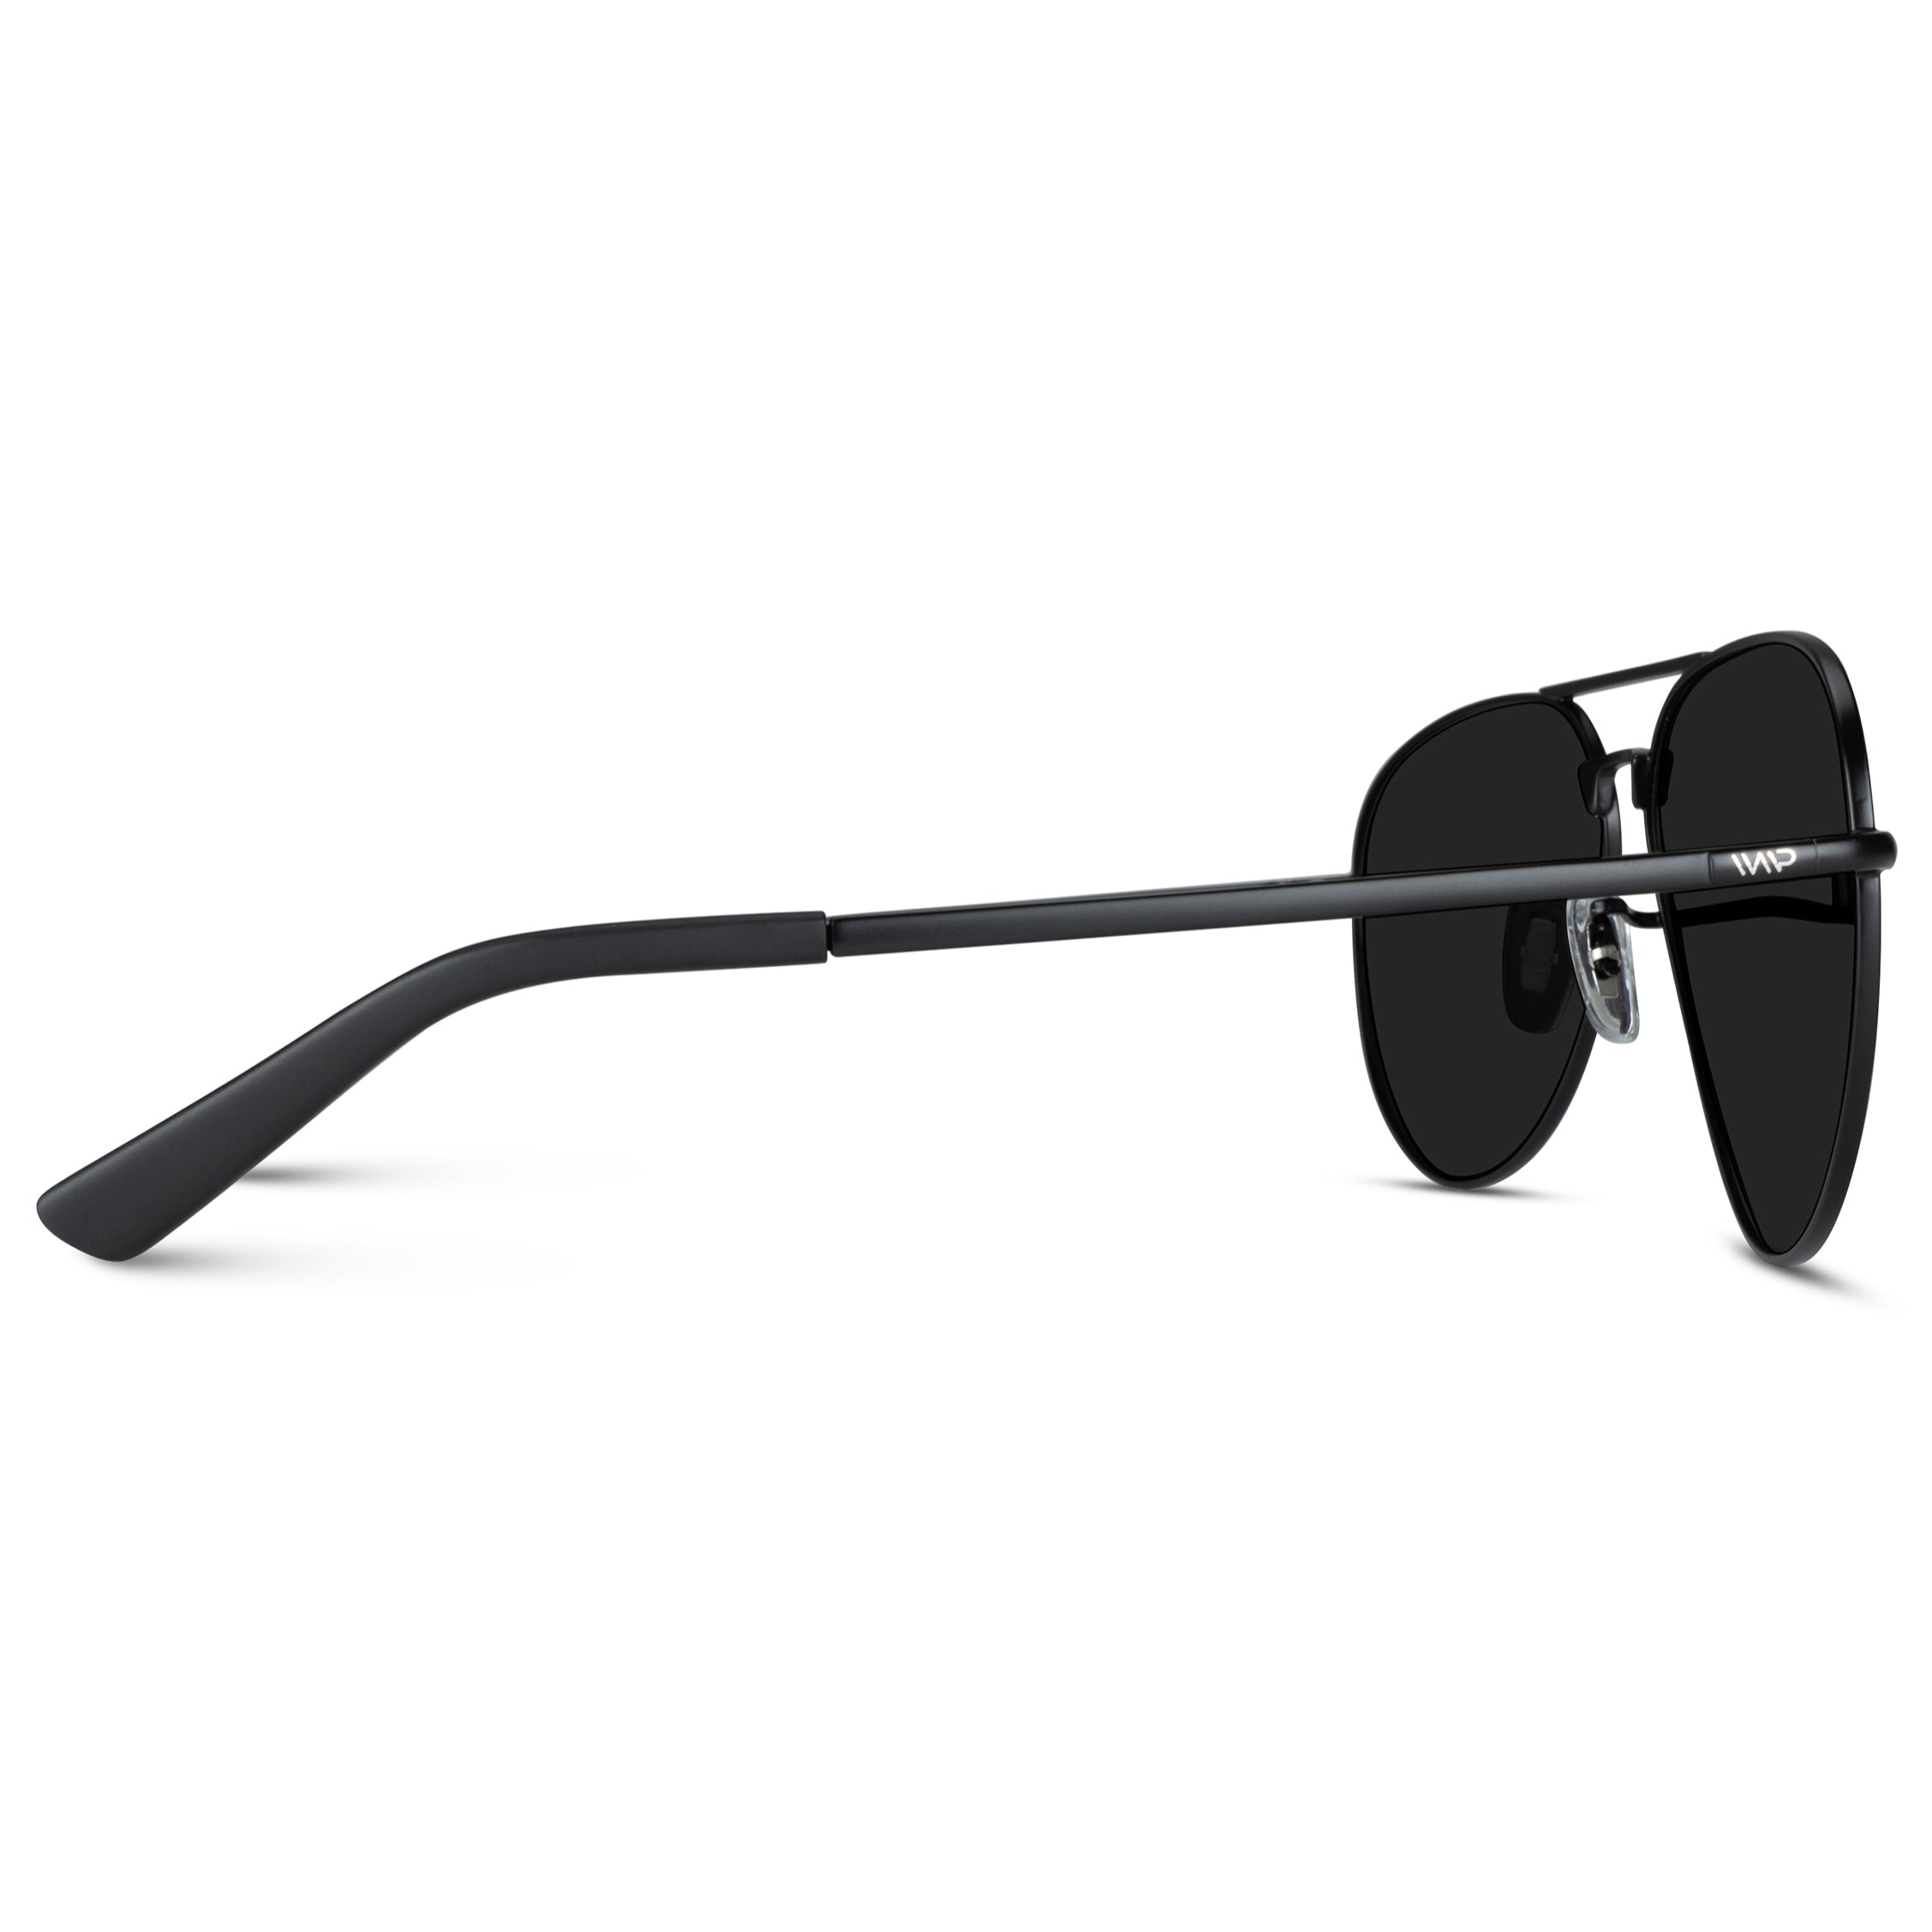 WearMe Pro - Classic Full Black Polarized Lens Metal Frame Men Aviator Style Sunglasses - image 5 of 6